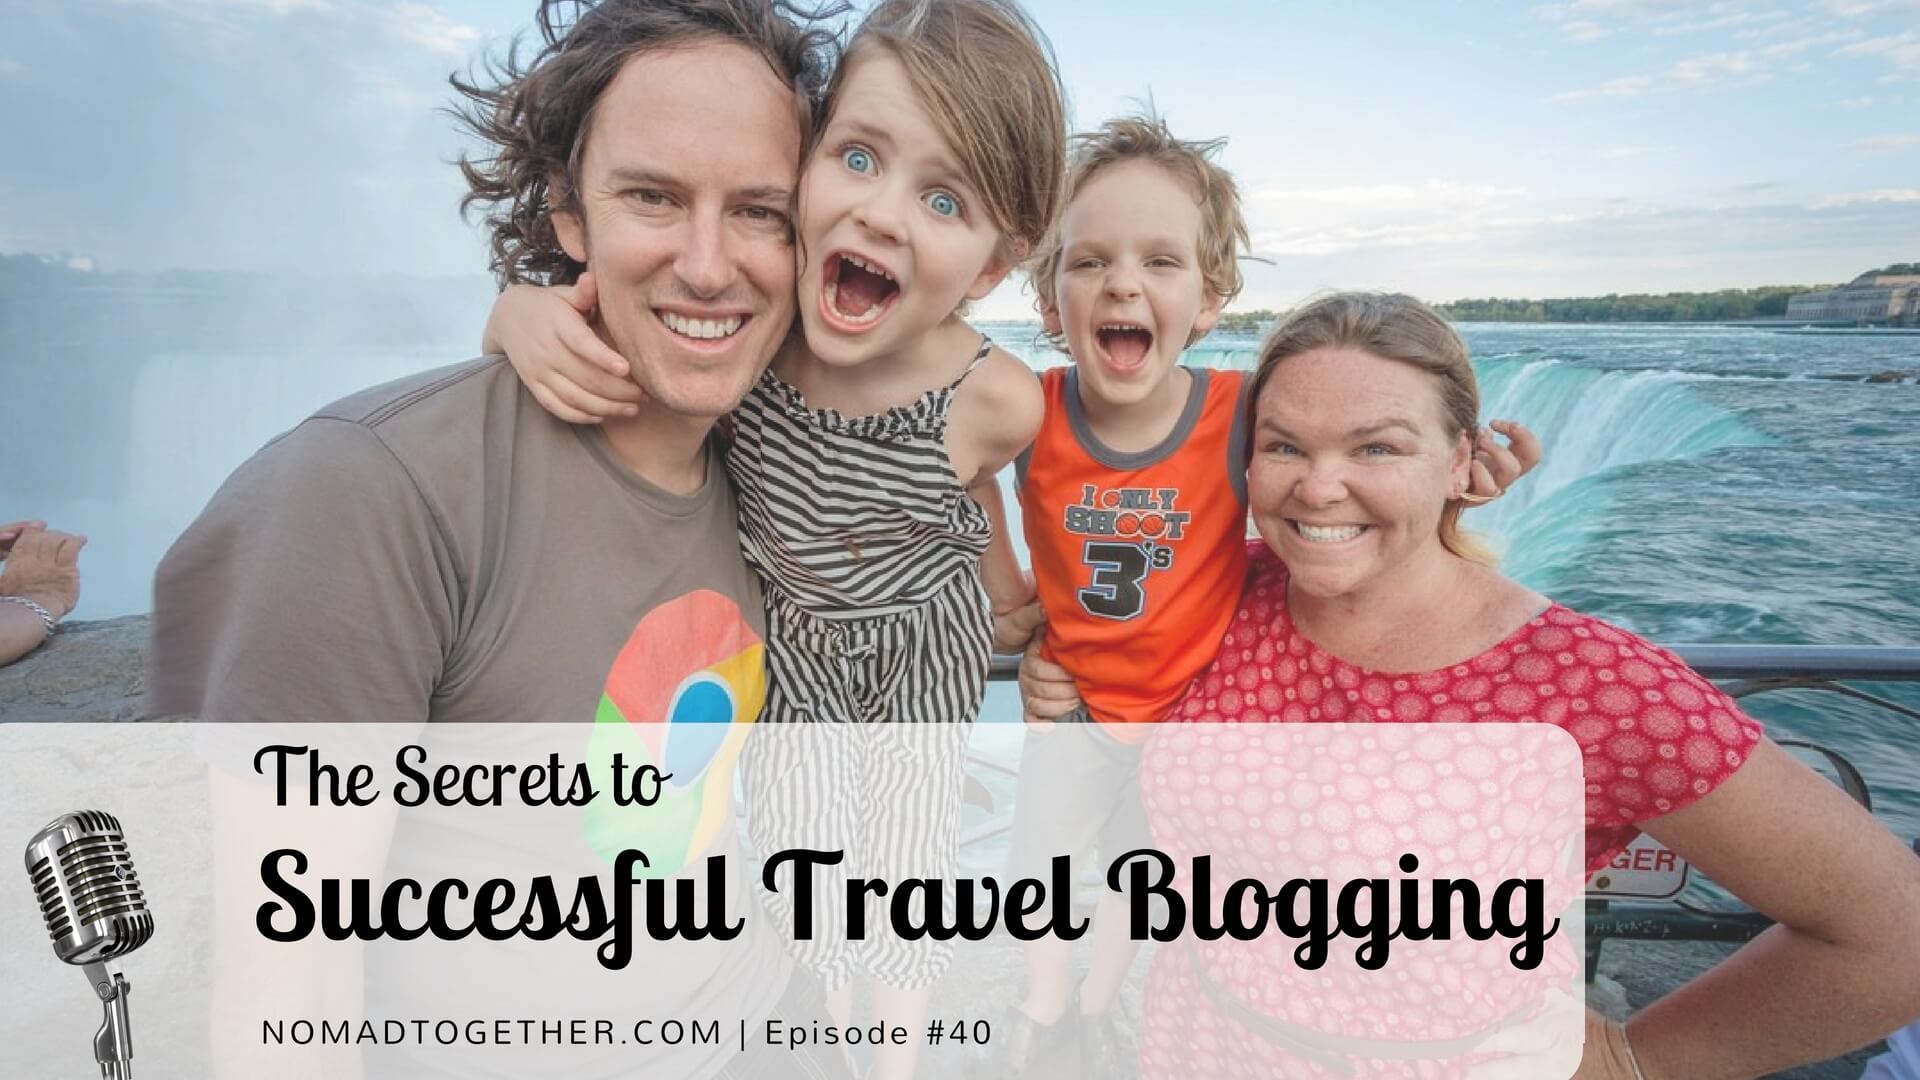 Episode #40: The Secrets to Successful Travel Blogging with Erin Bender of TravelWithBender.com